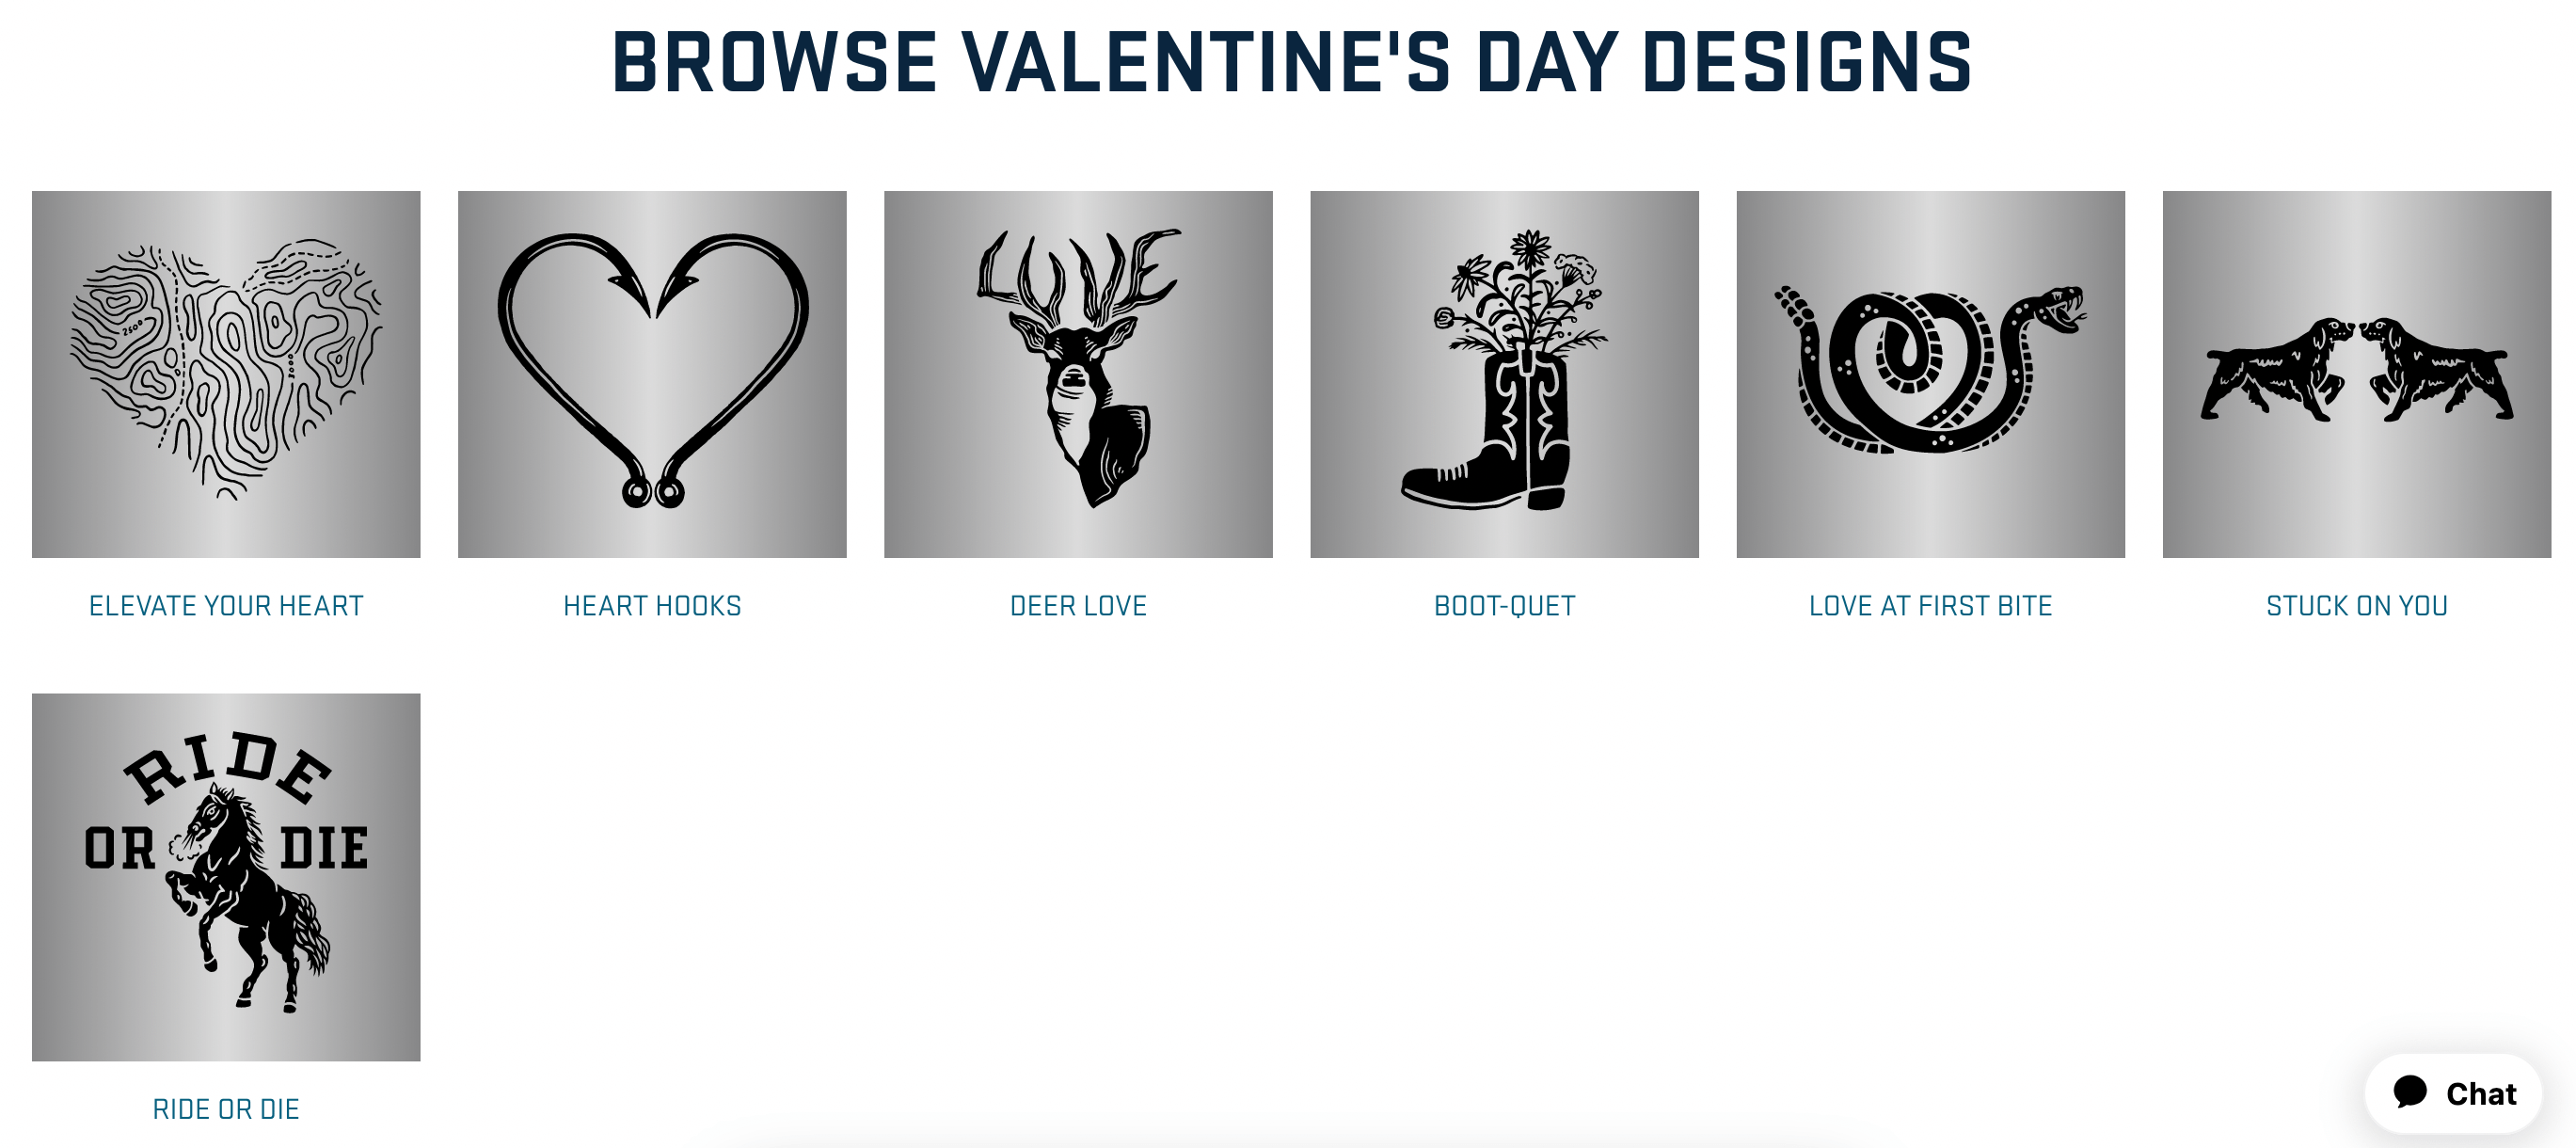 Examples of Yeti Valentine’s Day designs